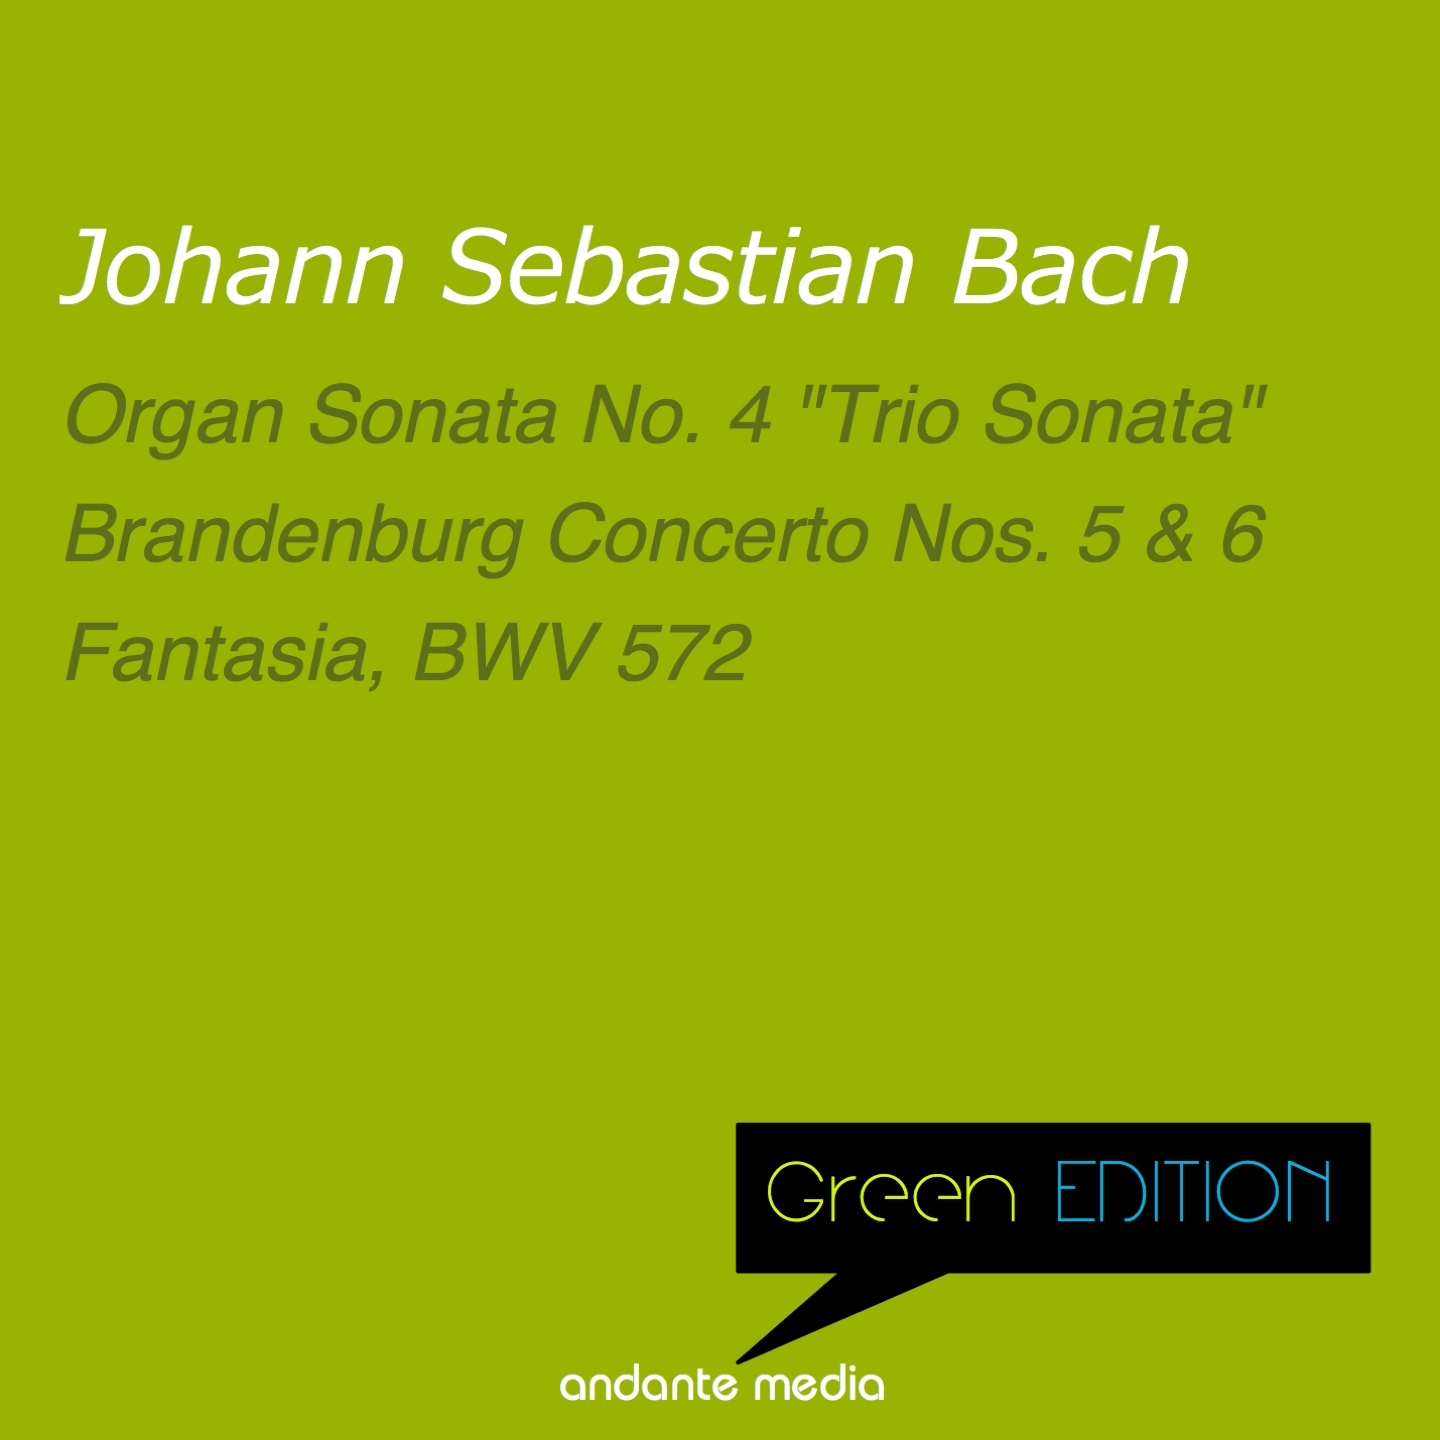 Green Edition - Bach: Organ Sonata No. 4 "Trio Sonata" & Fantasia, BWV 572